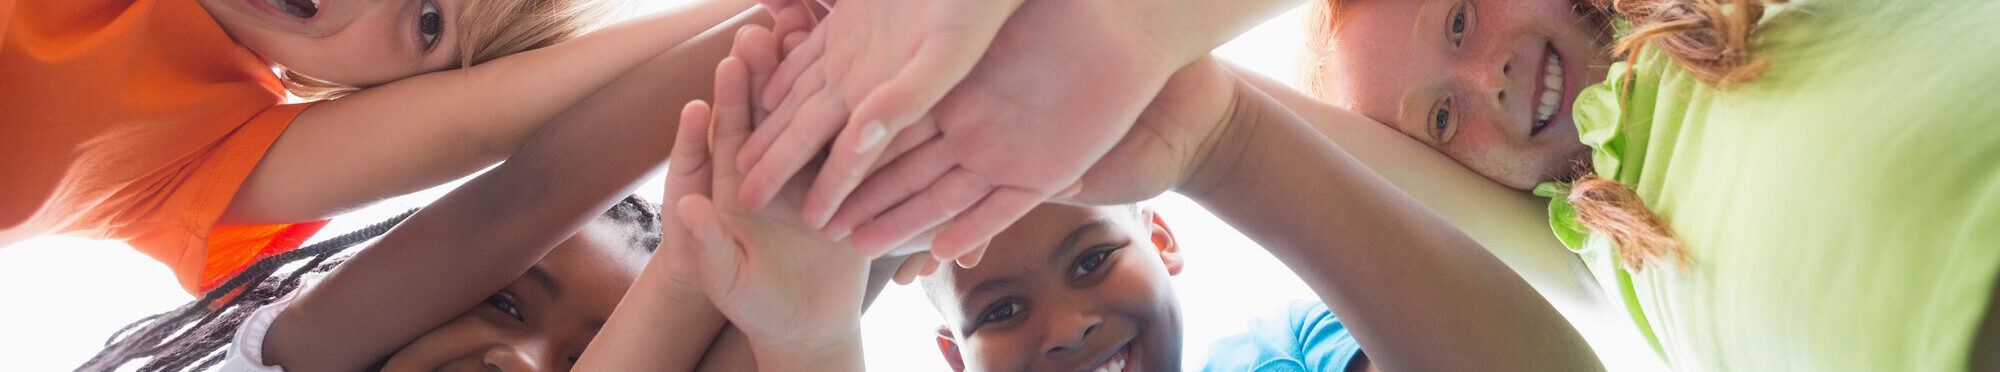 Kindergruppe mit Händen (© WavebreakmediaMicro - stock.adobe.com)